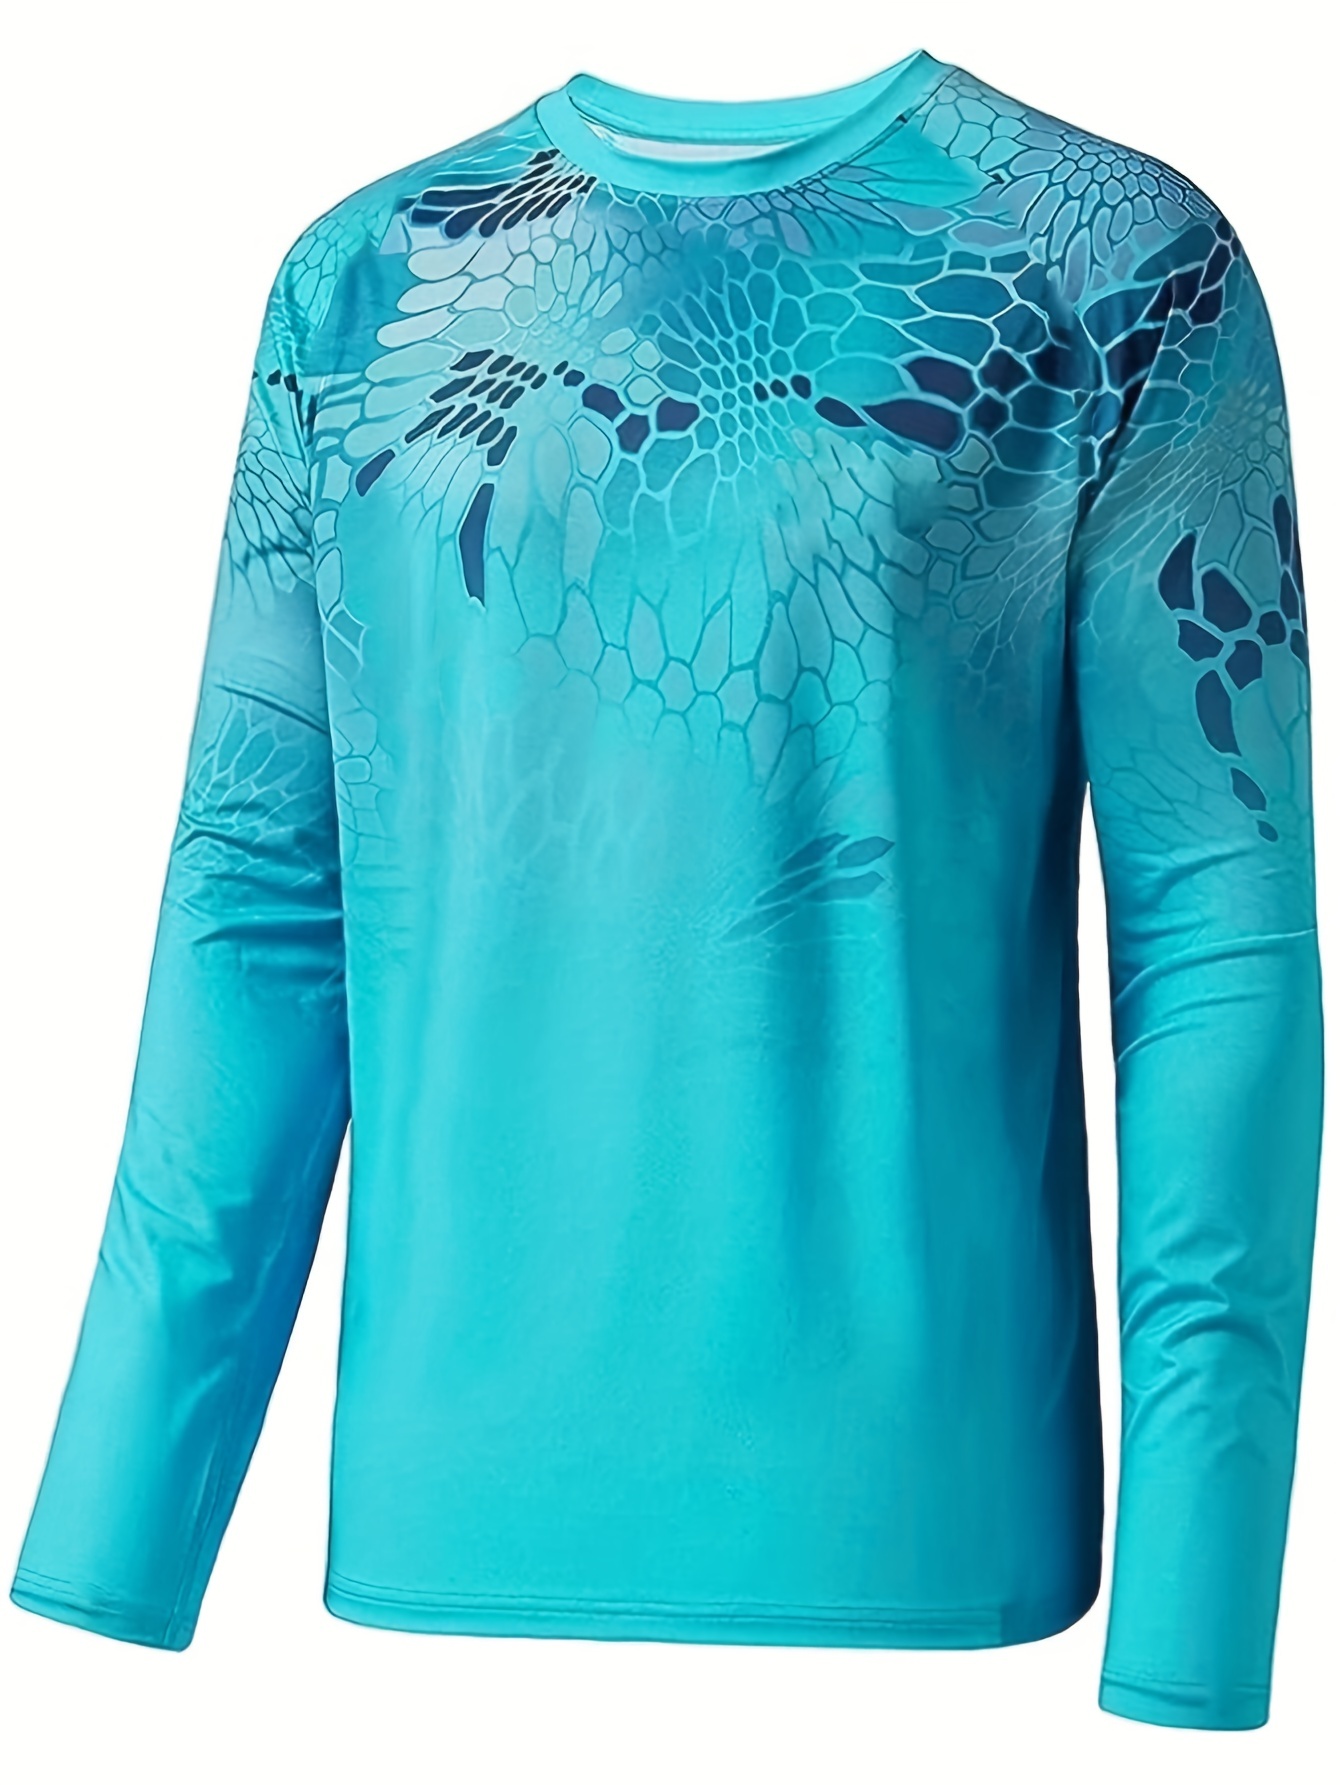 Men's Upf 50+ Sun Protection Shirt, Snake Skin Print Quick Dry Long Sleeve Rash Guard For Fishing Hiking Outdoor